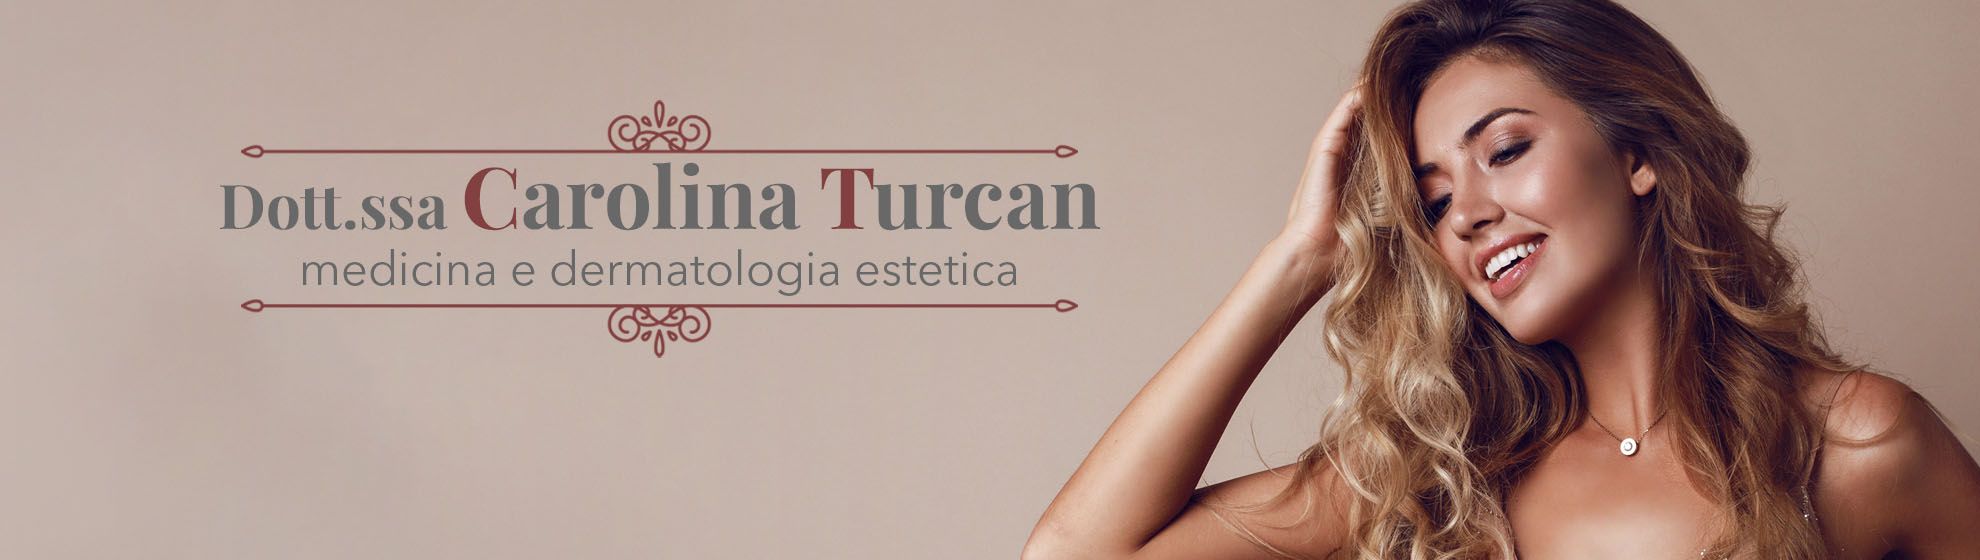 Dott.ssa Carolina Turcan